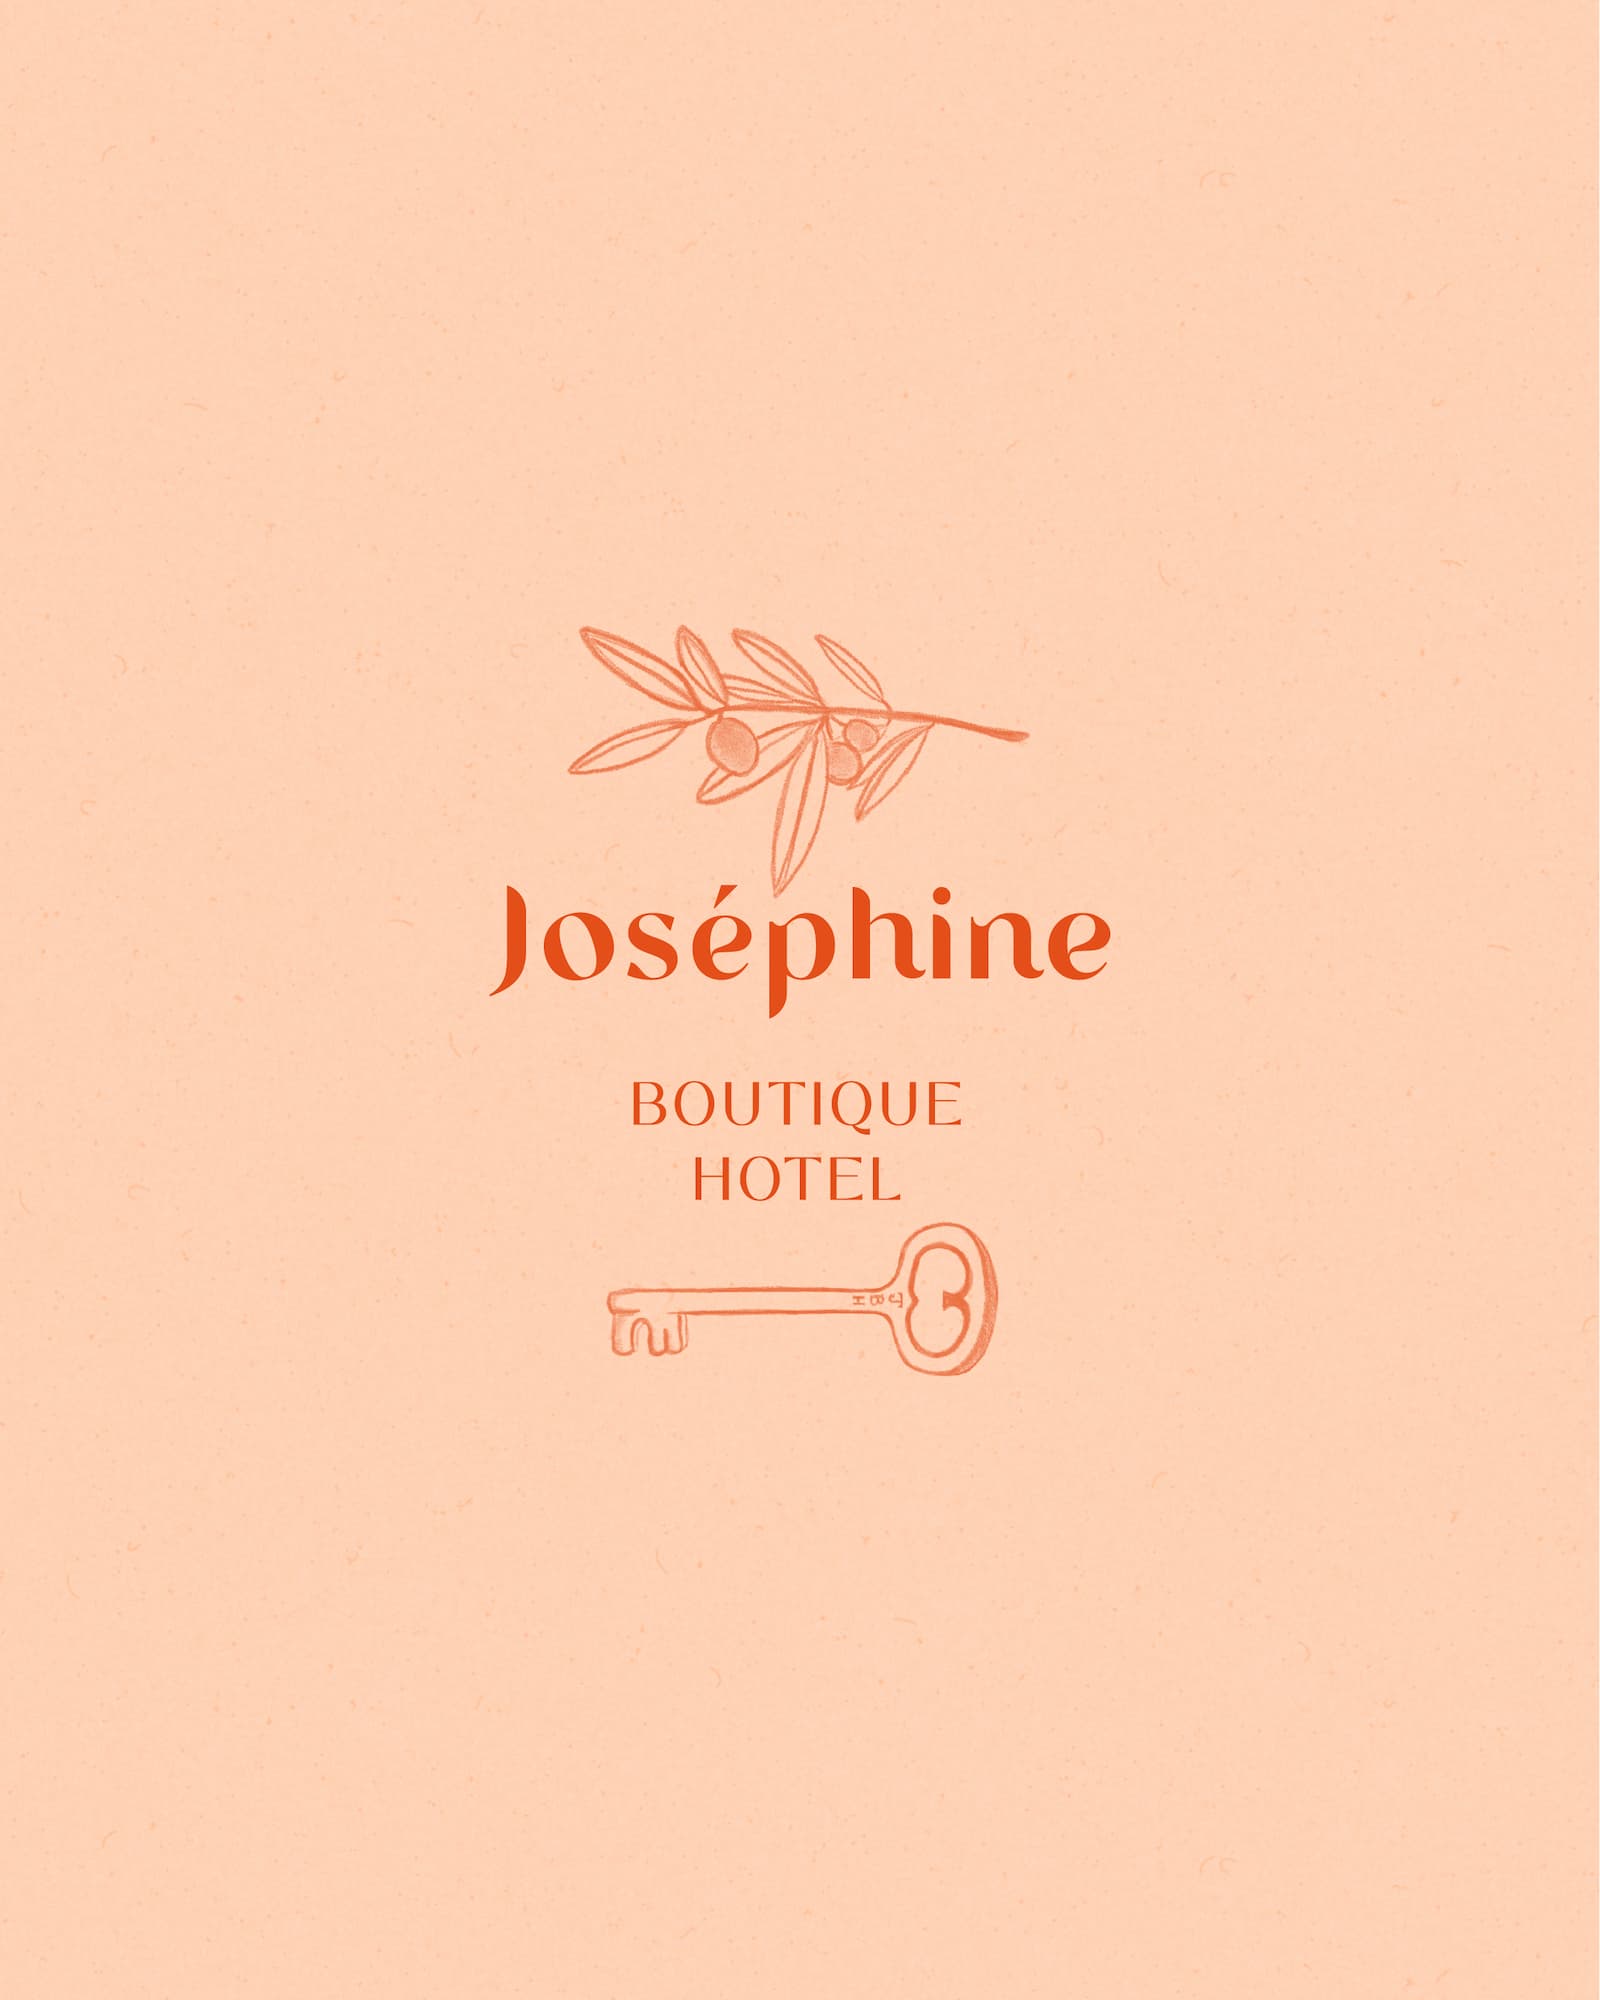 Joséphine Boutique Hotel  Identity